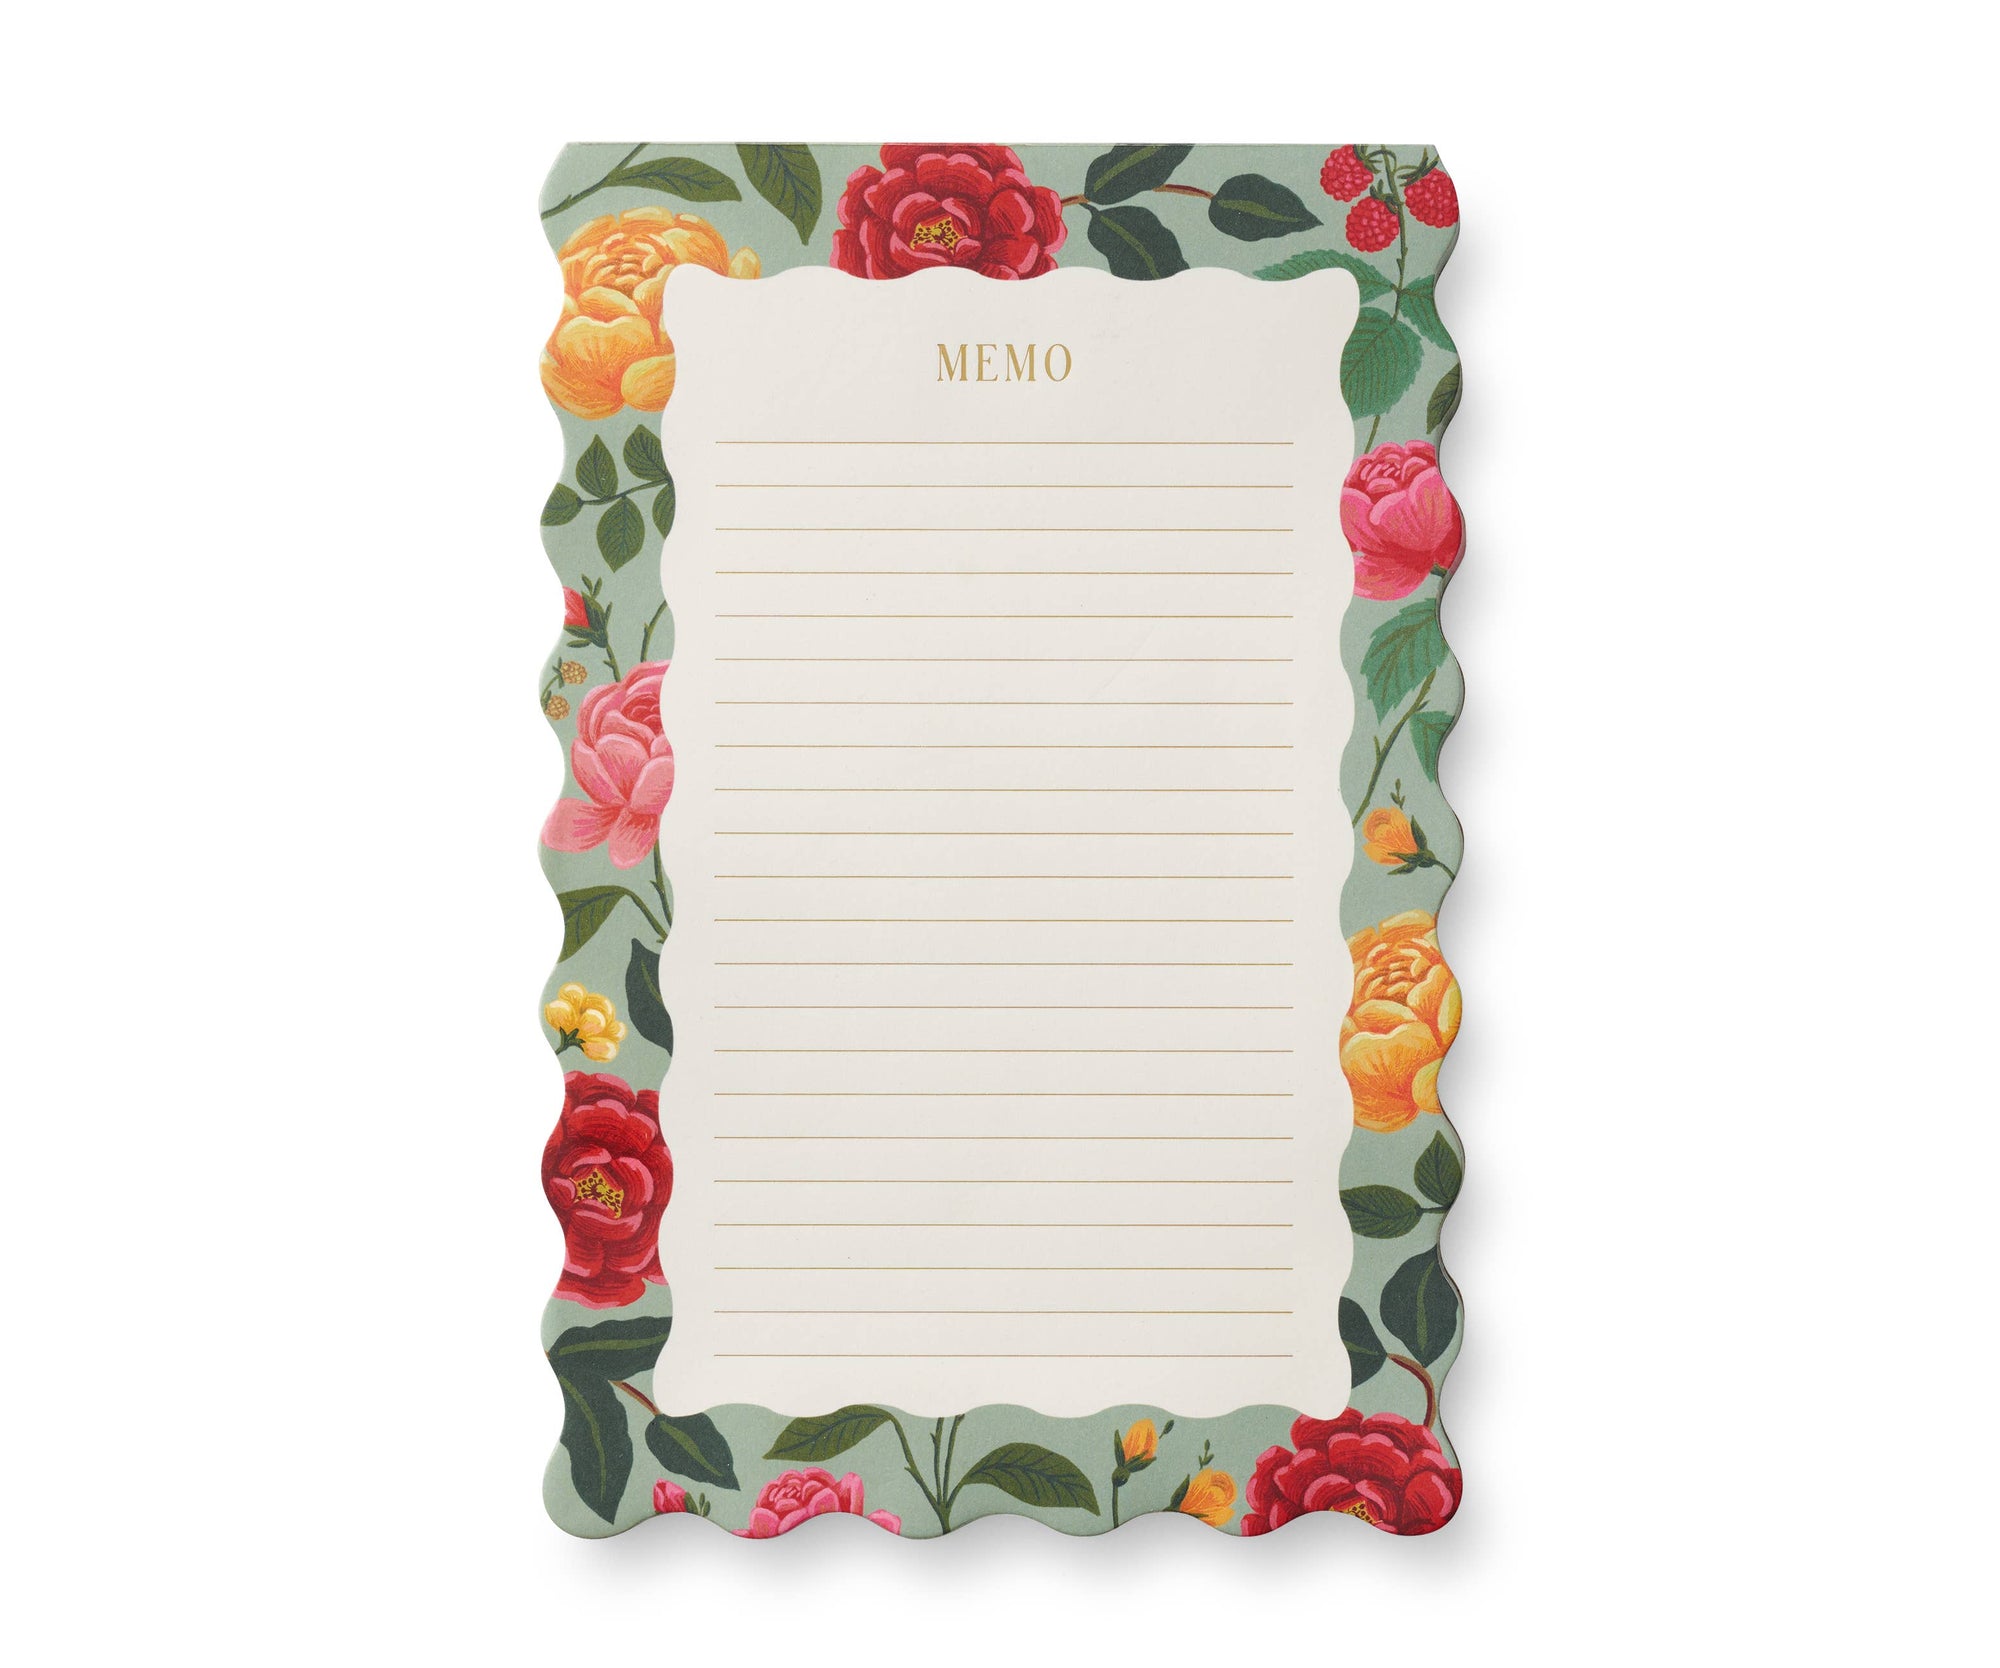 Roses Memo Notepad - The Preppy Bunny